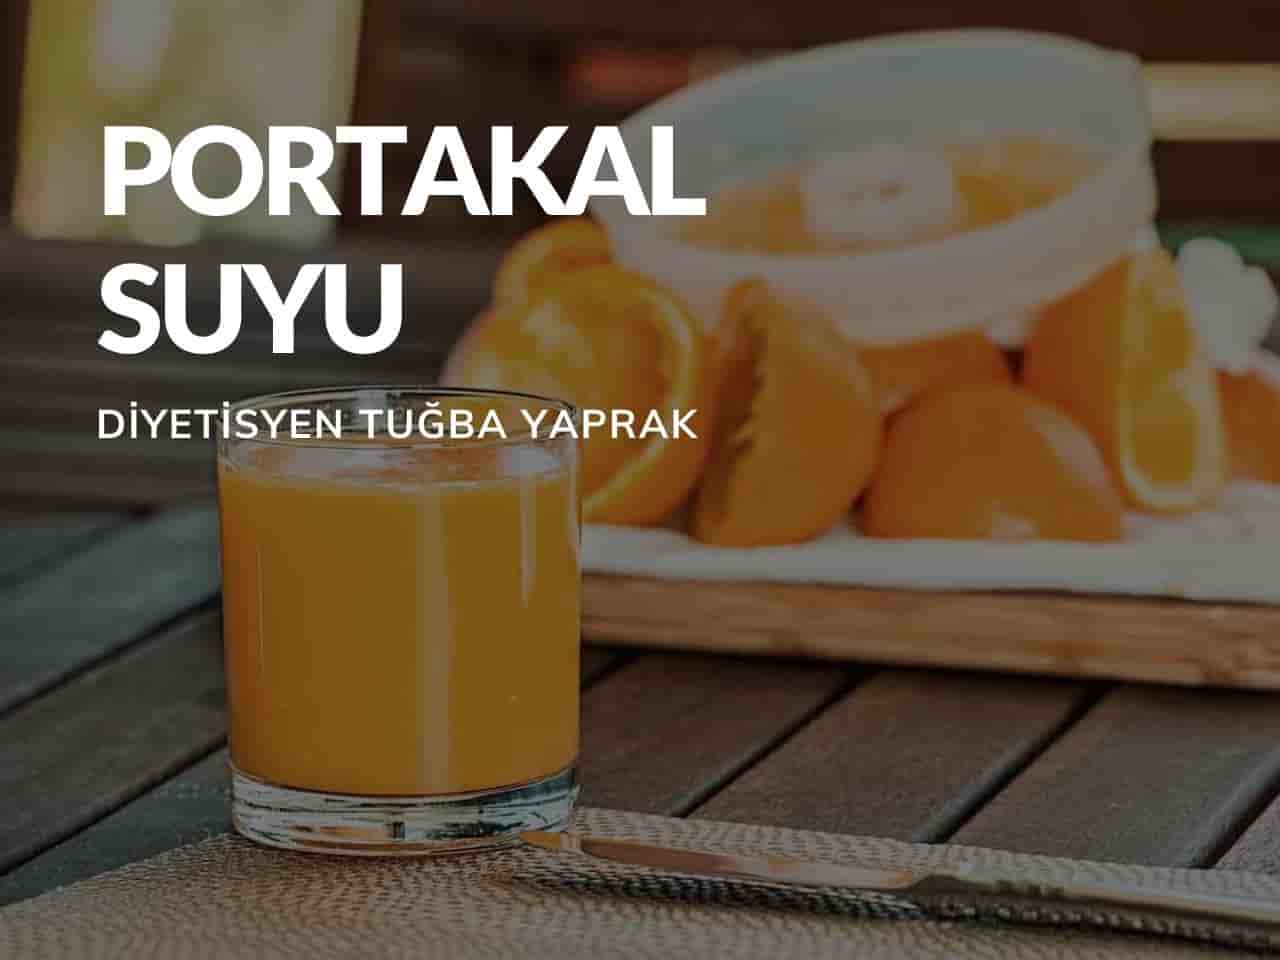 Portakal Suyu